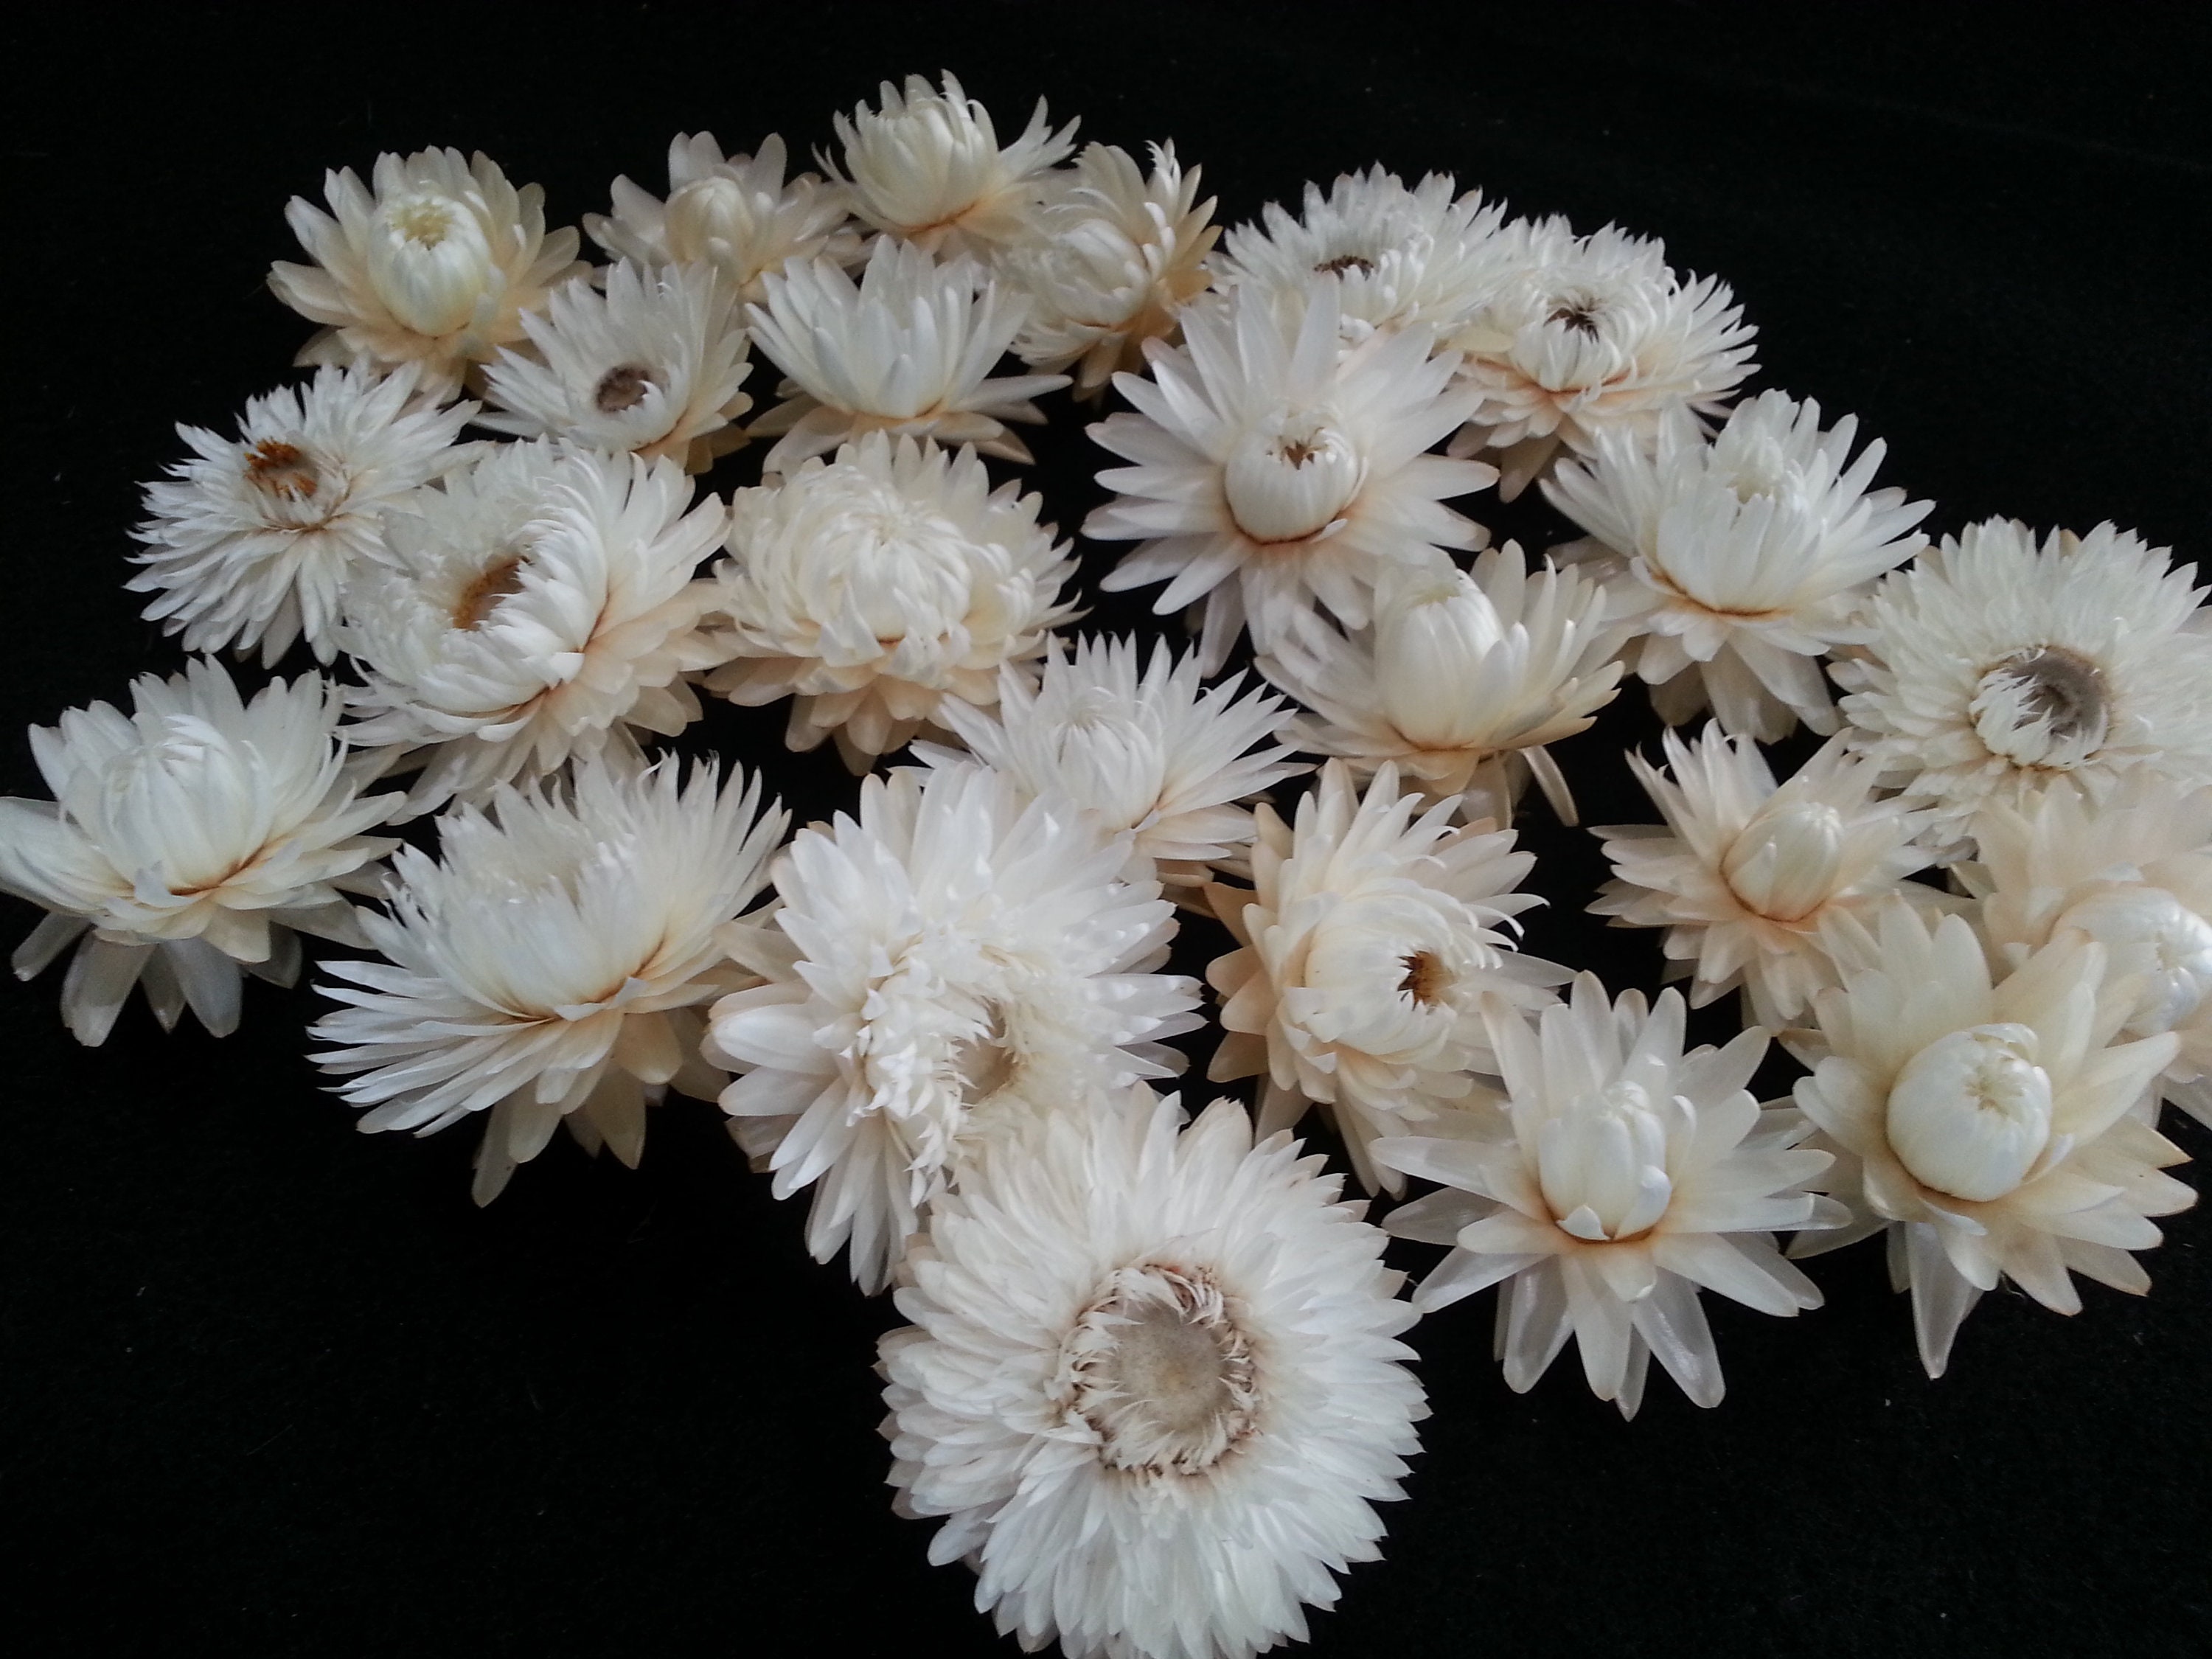 Flower crafts made fresh then dried from a Sebastopol garden